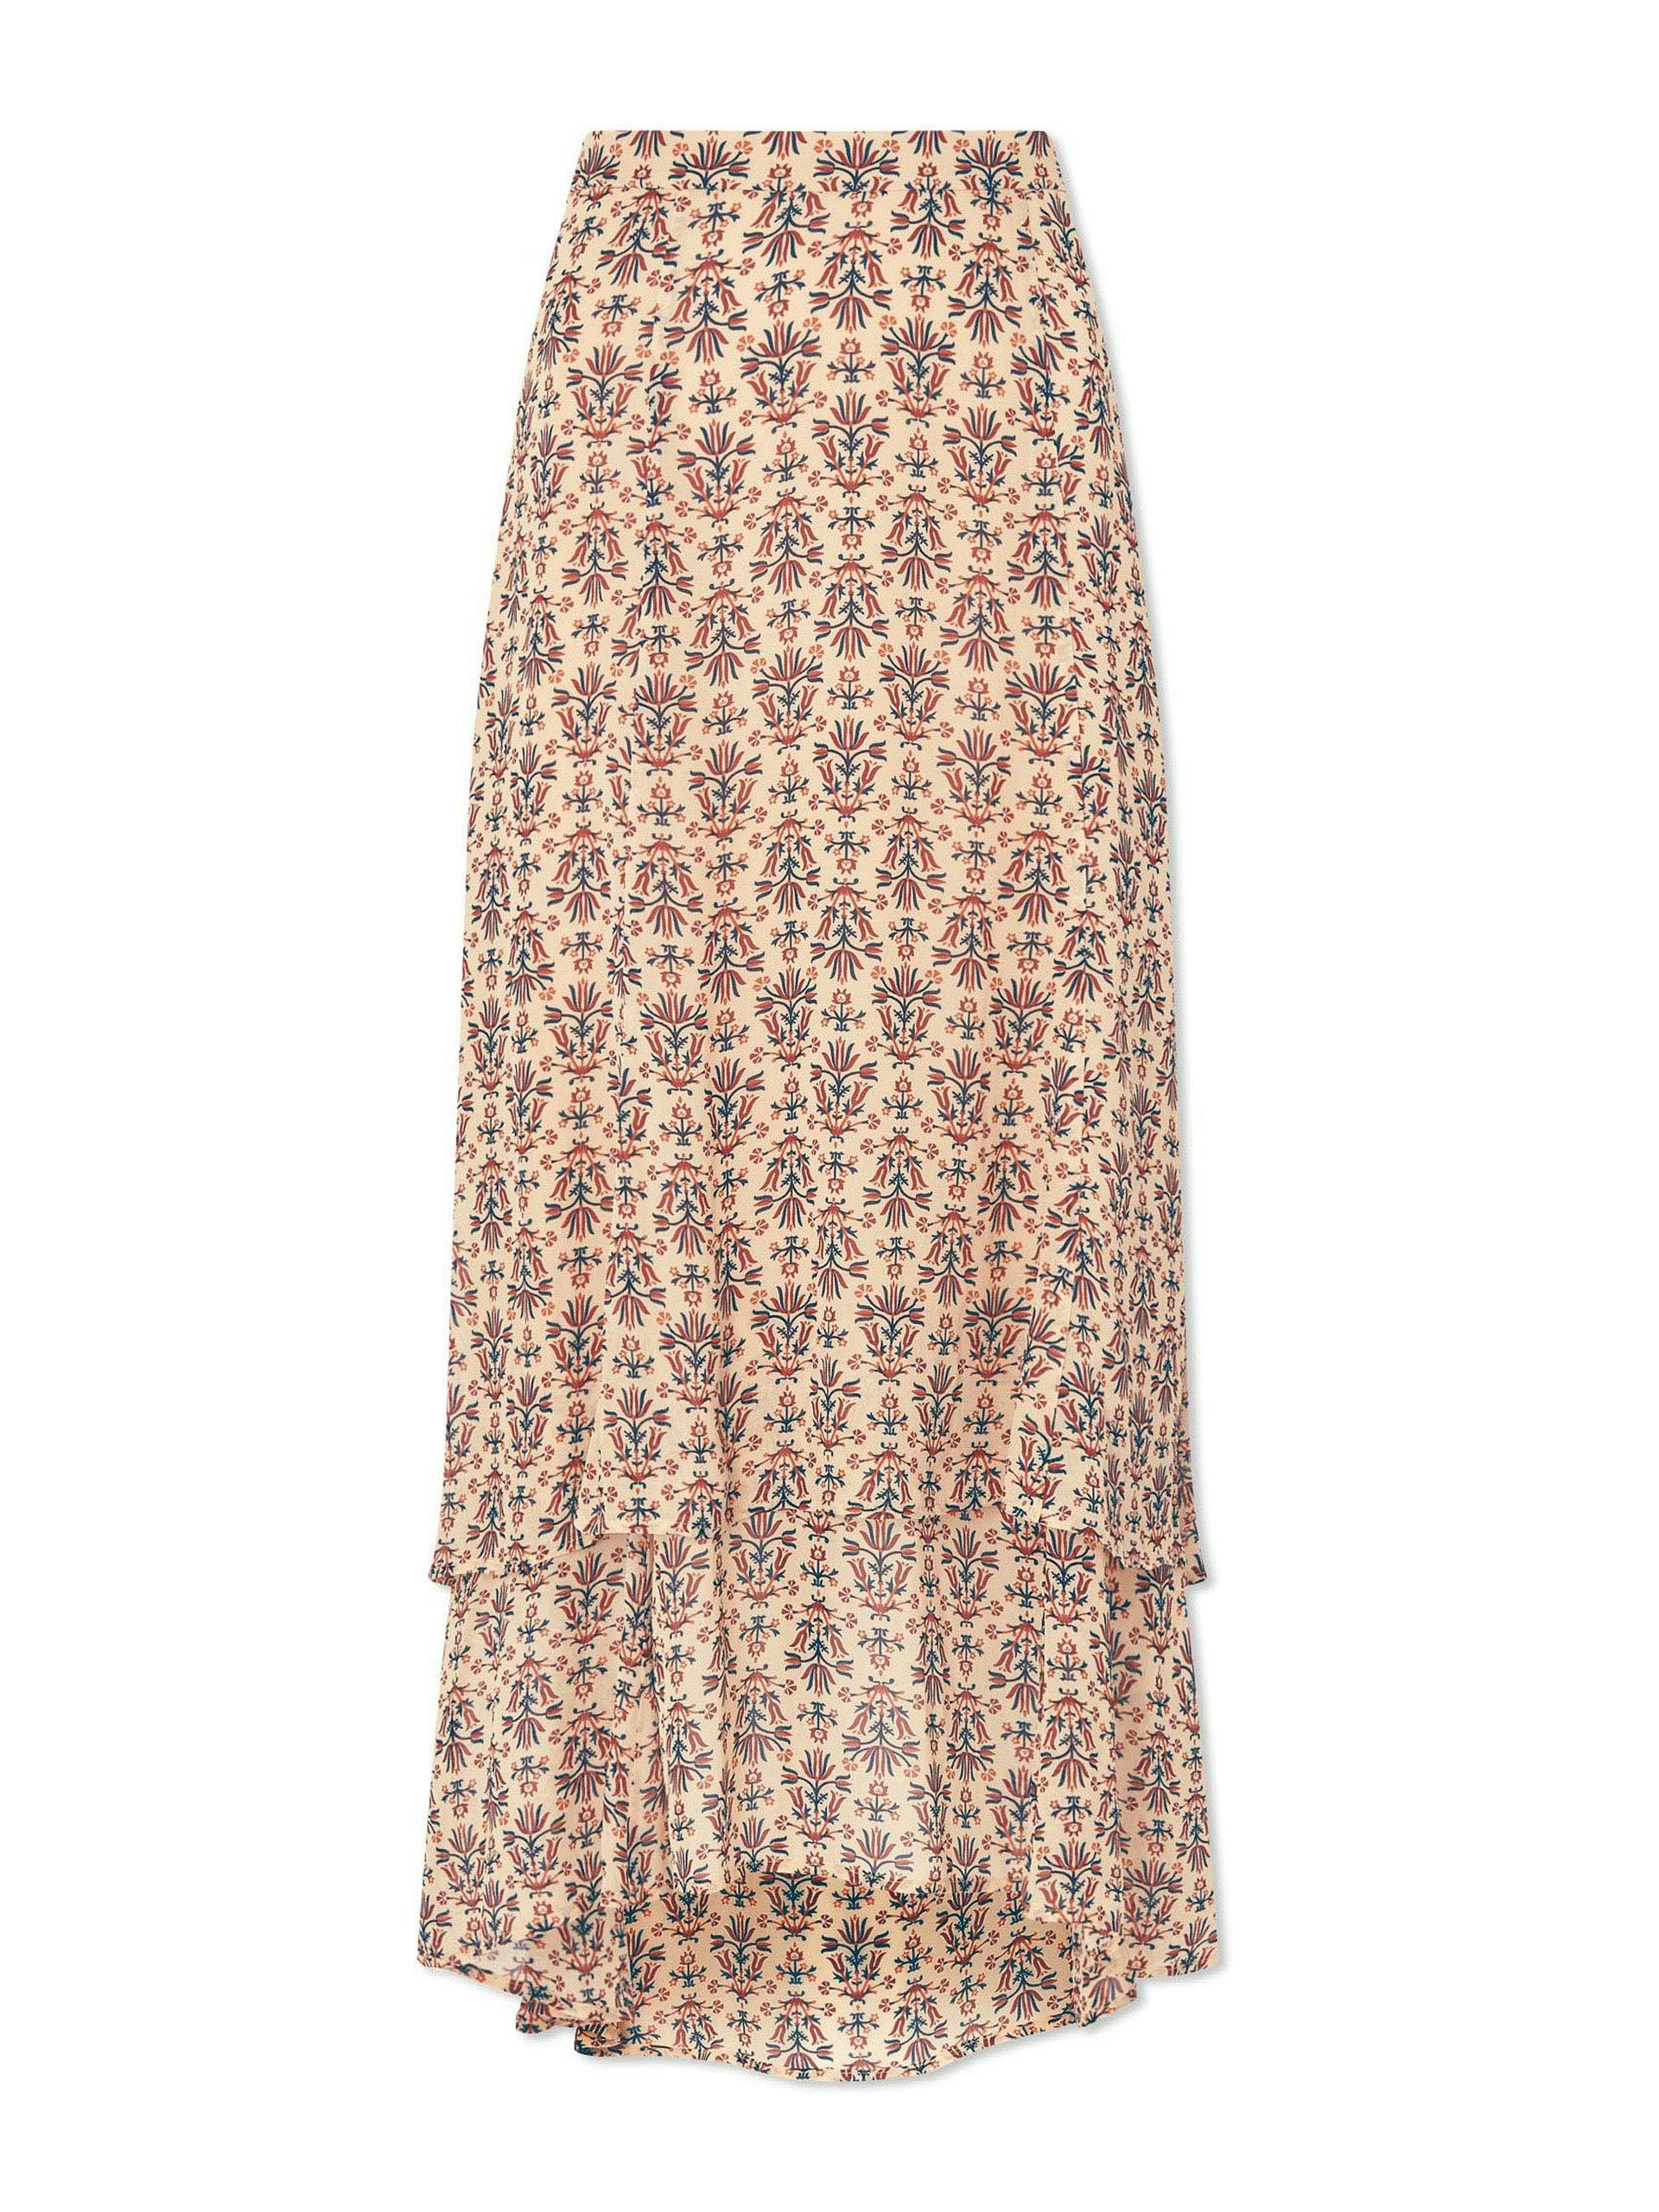 Lotta stone rust folk floral print skirt